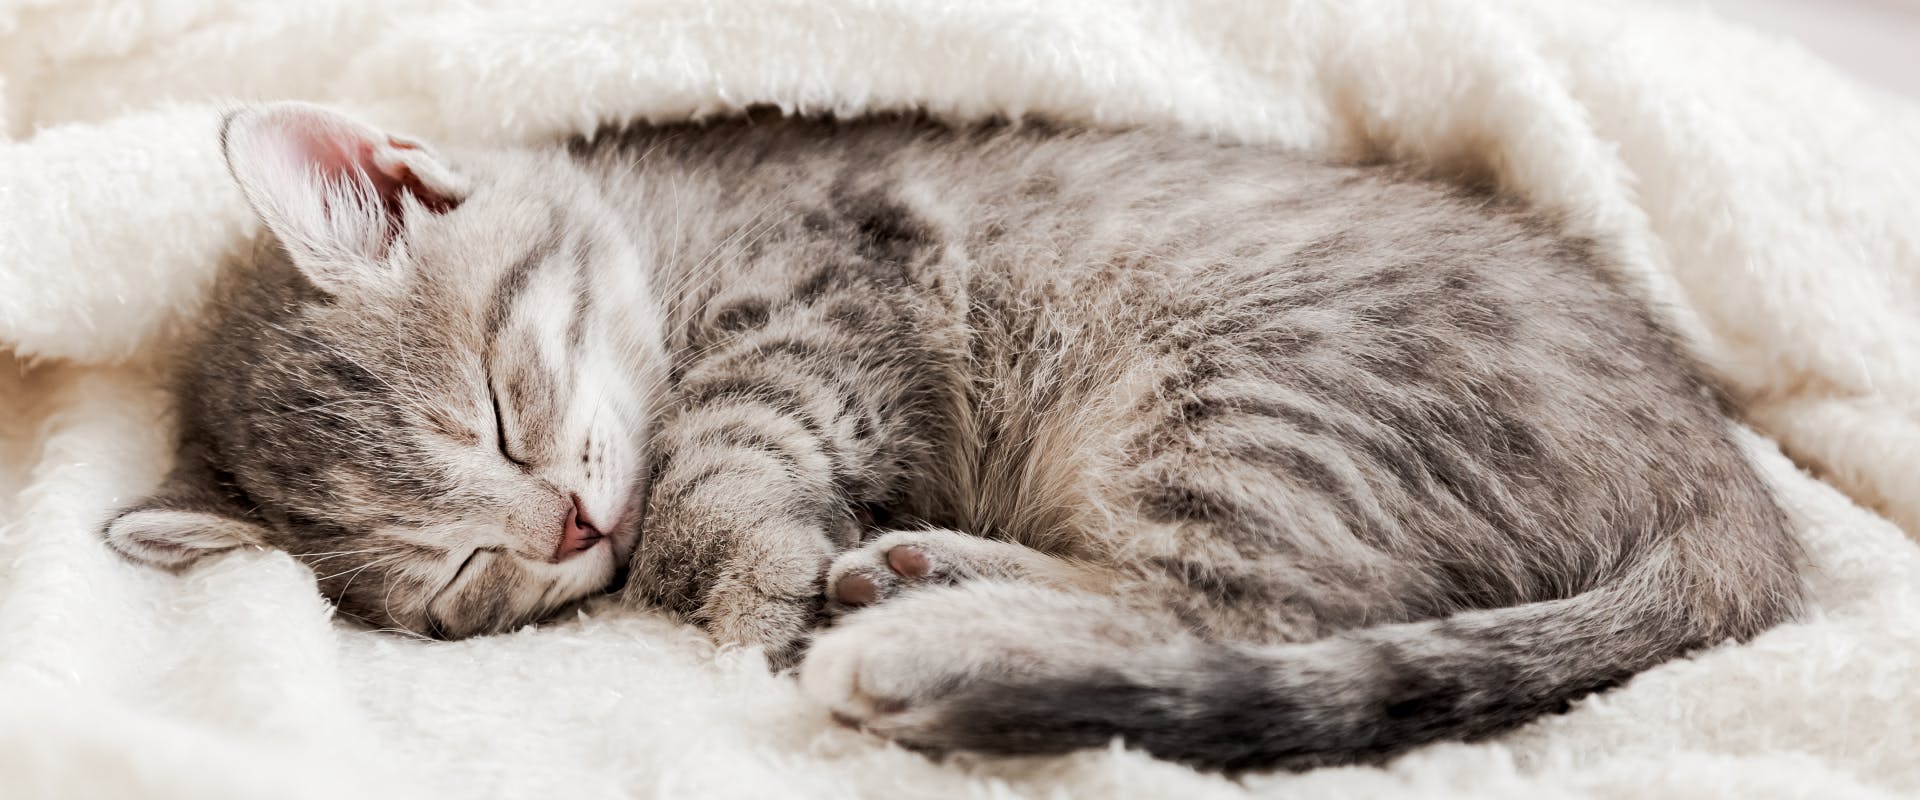 A kitten sleeps under a blanket.